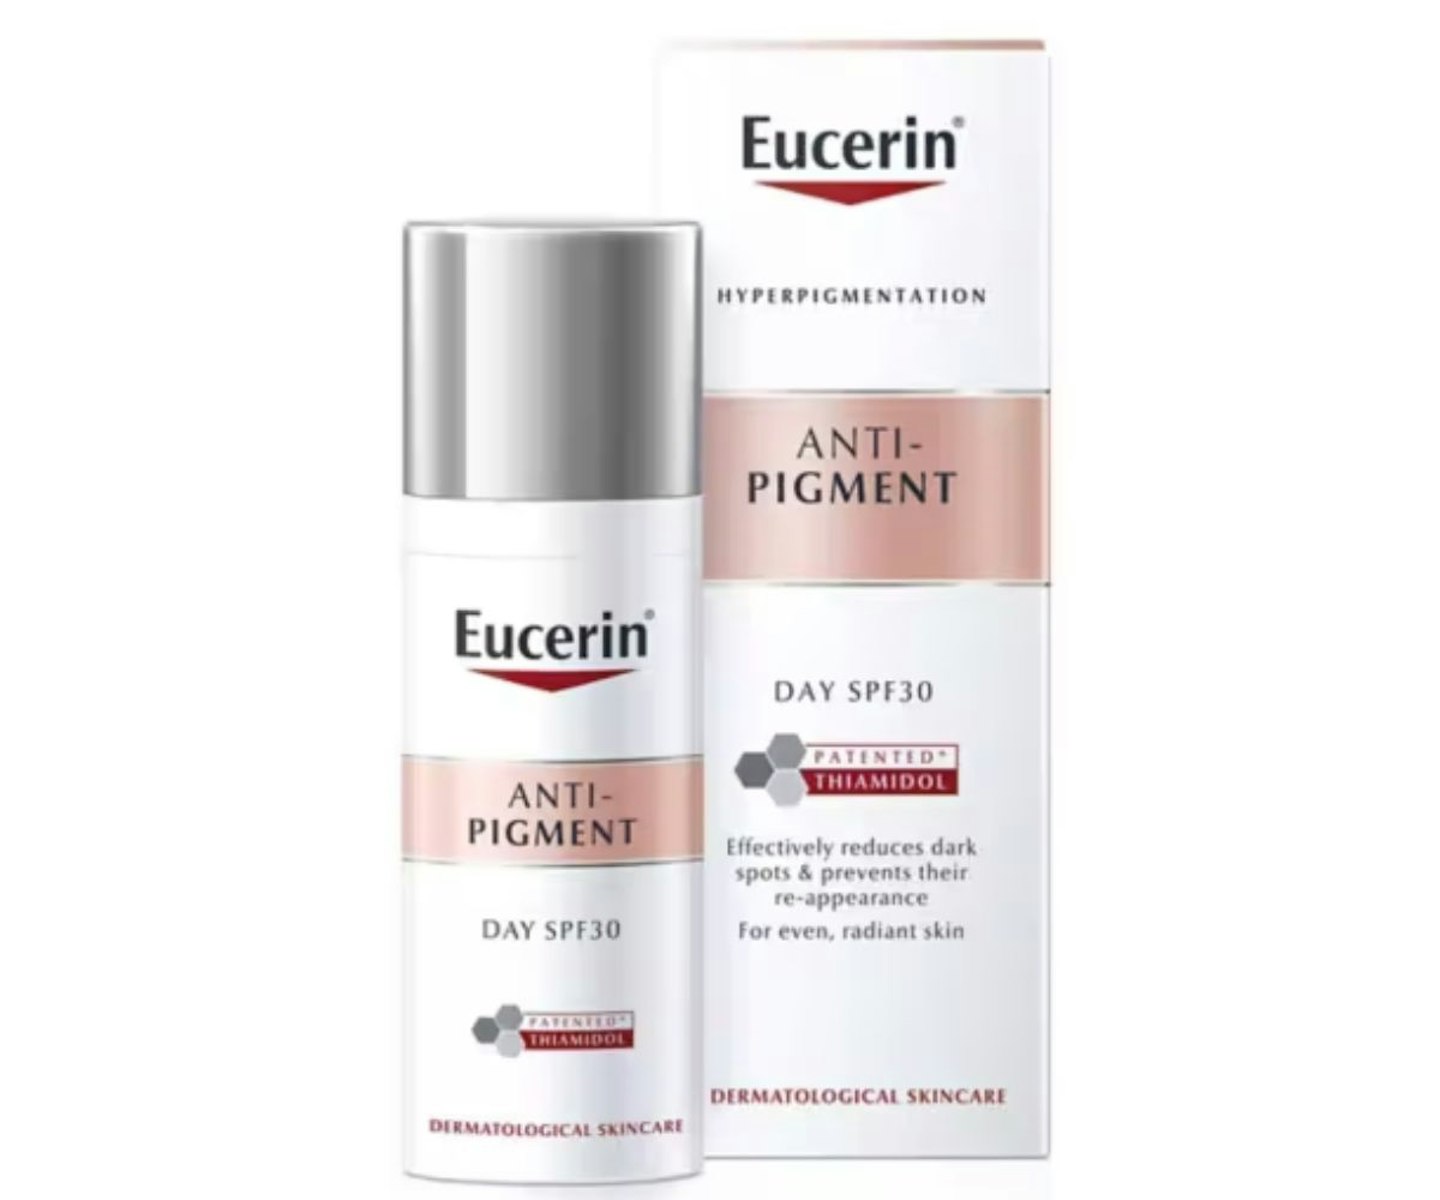 Eucerin Anti-Pigment Face Cream with SPF 30